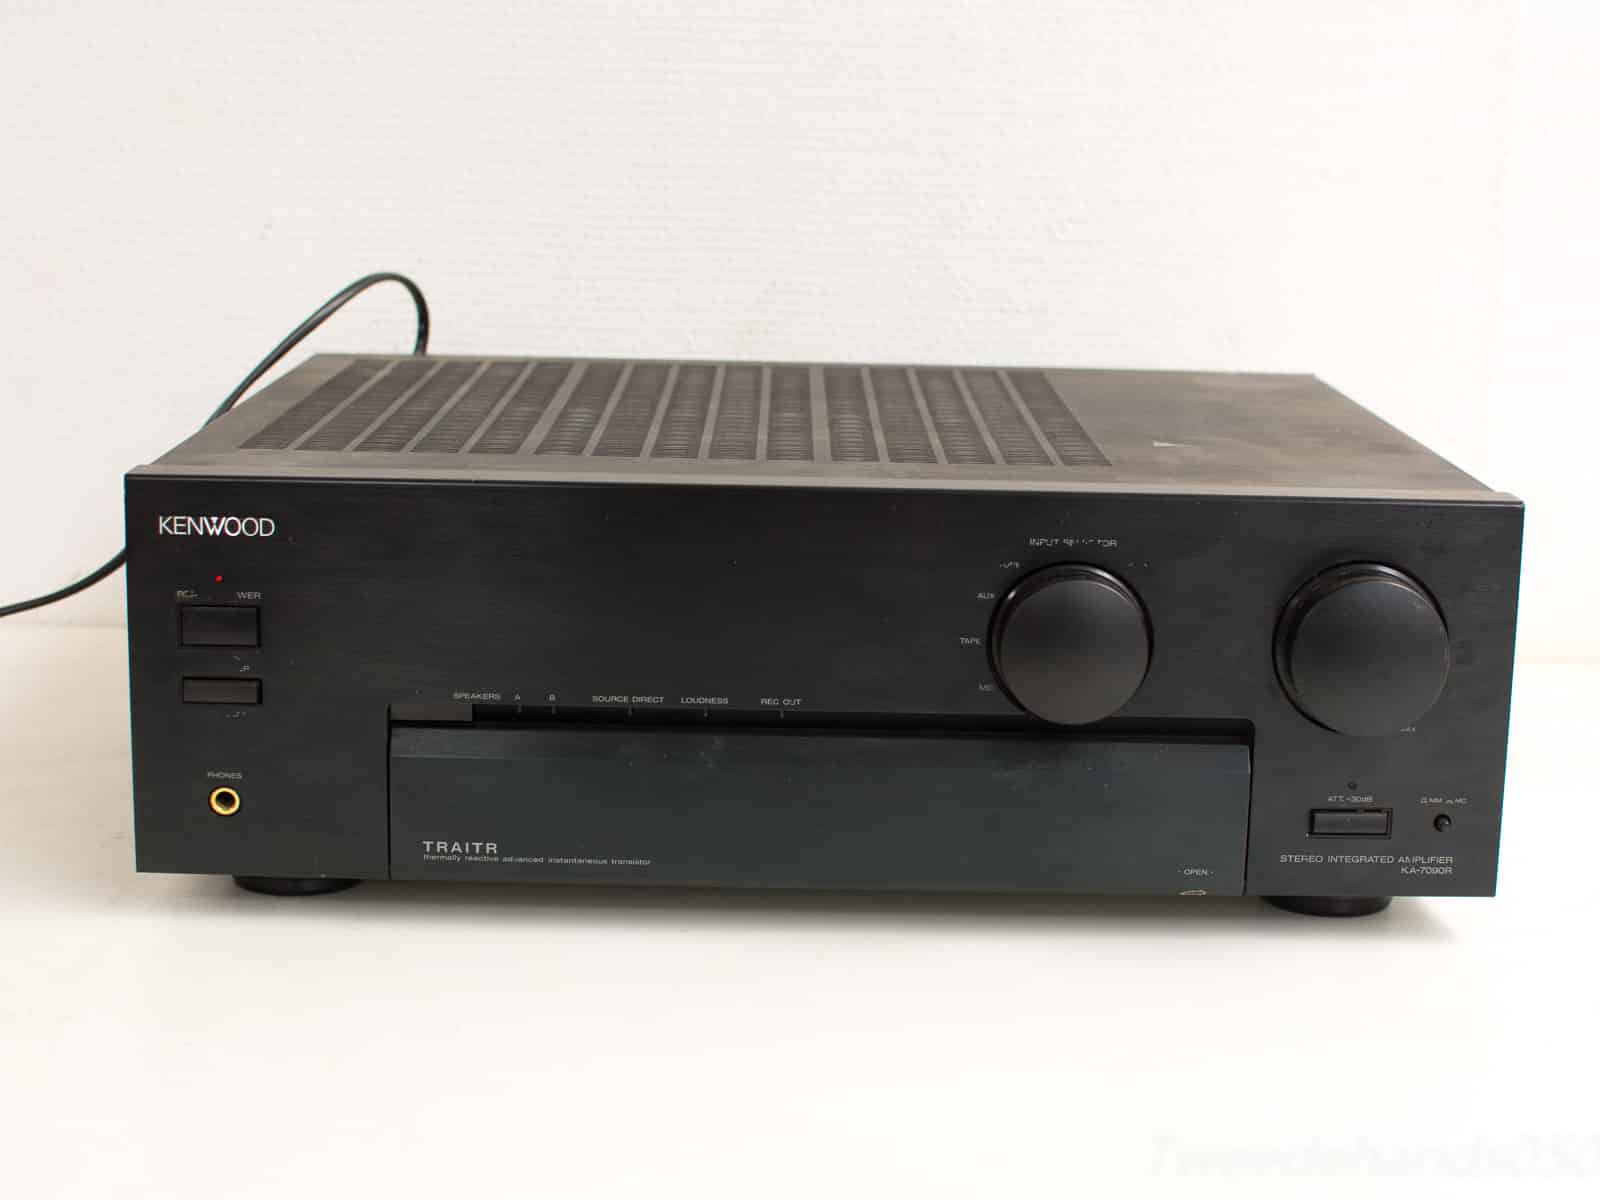 Kenwood stereo integrate amplifier 26632